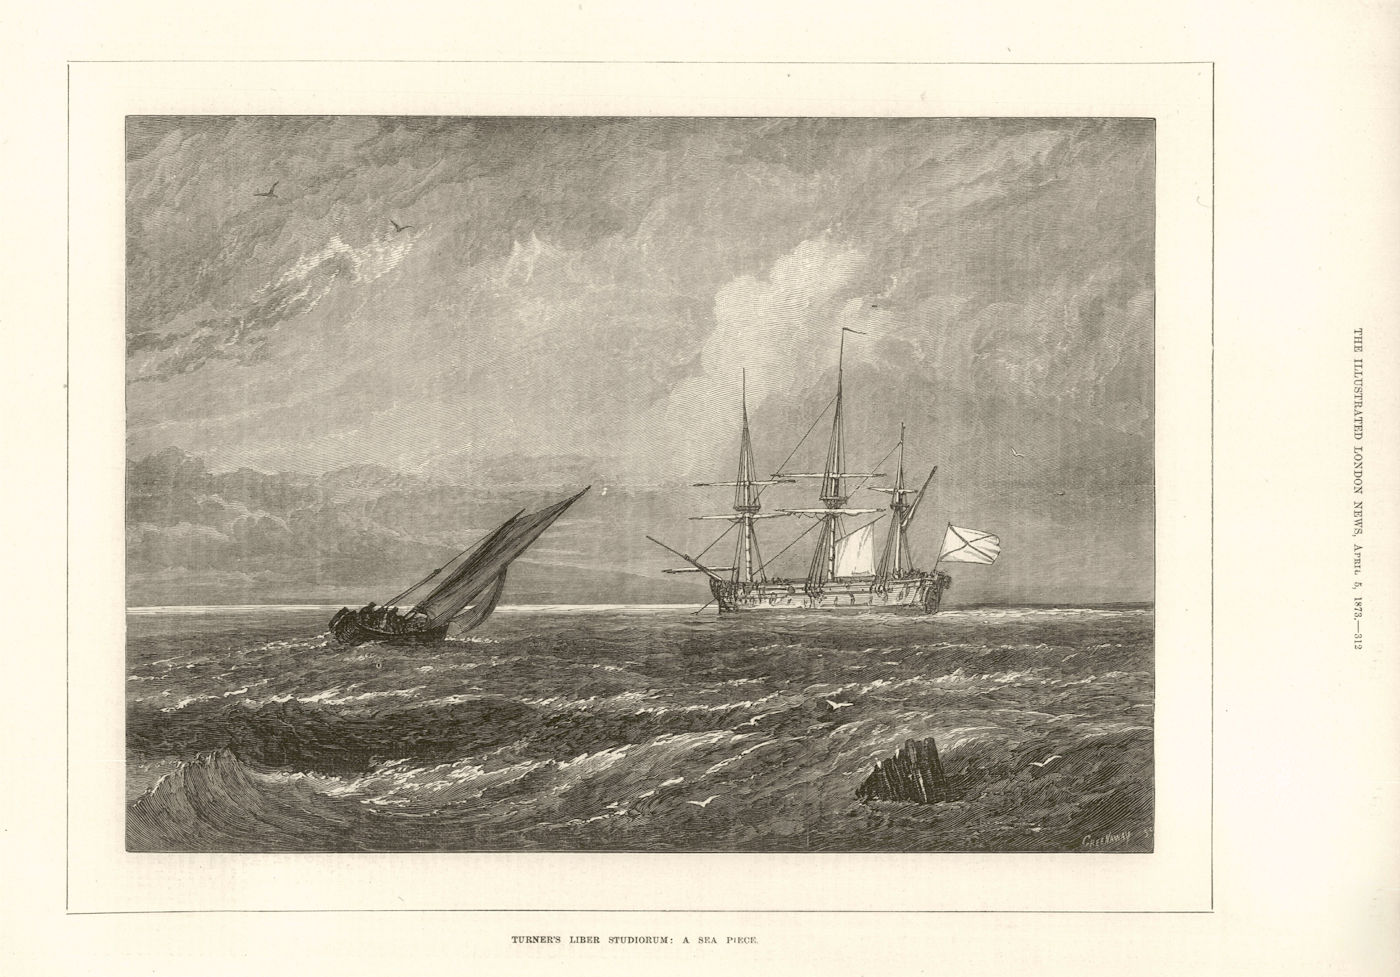 Turner's Liber Studiorum: A sea piece. Man of War. Royal Navy 1873 old print